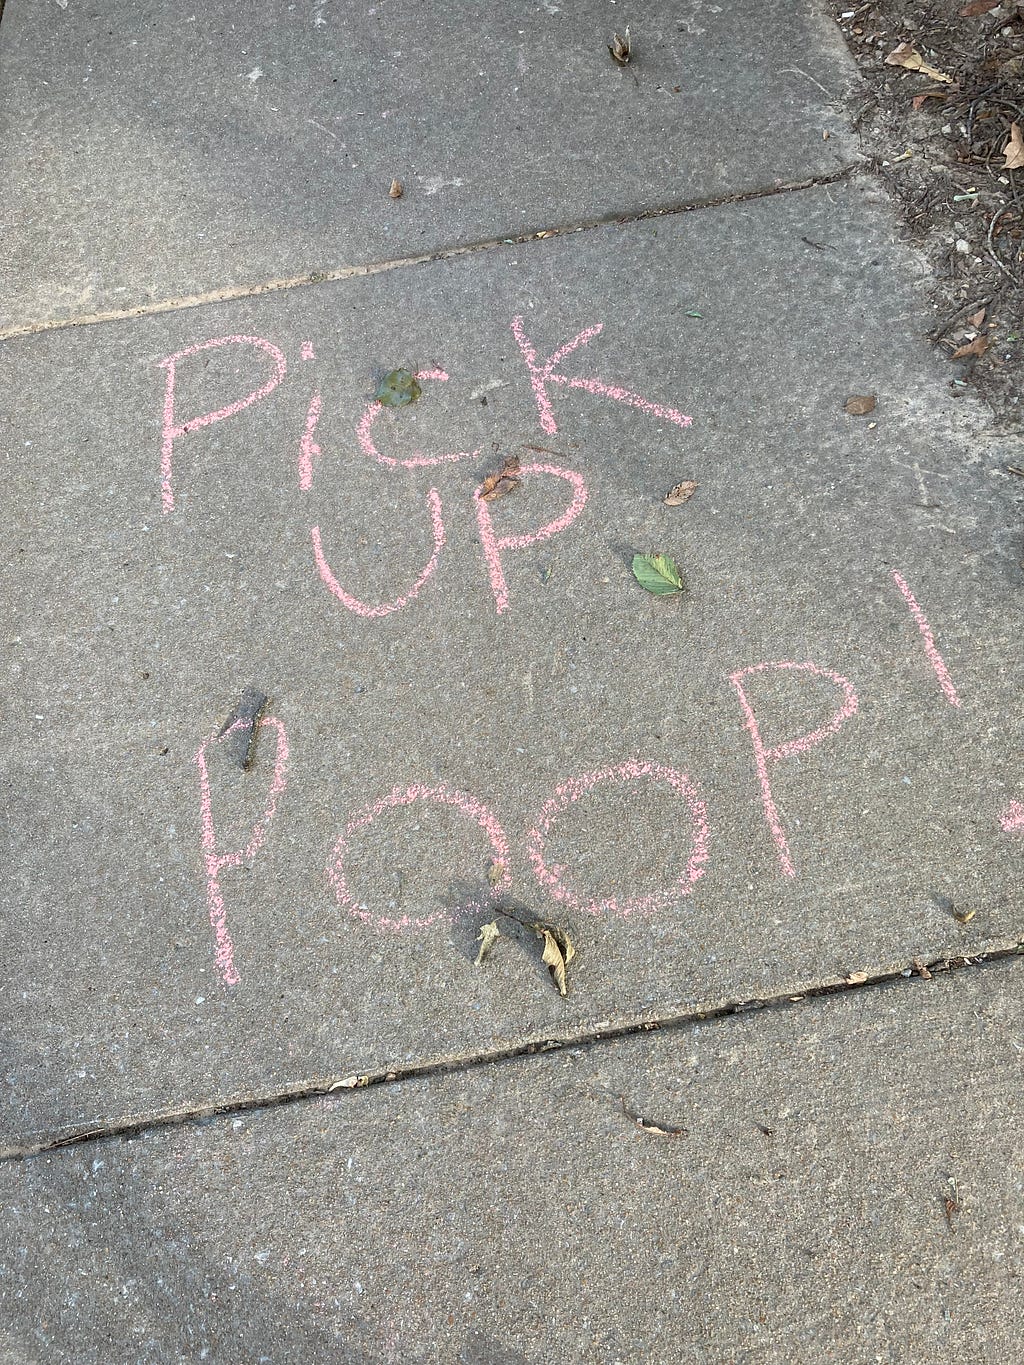 The message “Pick Up Poop!” printed in pink chalk on a sidewalk.